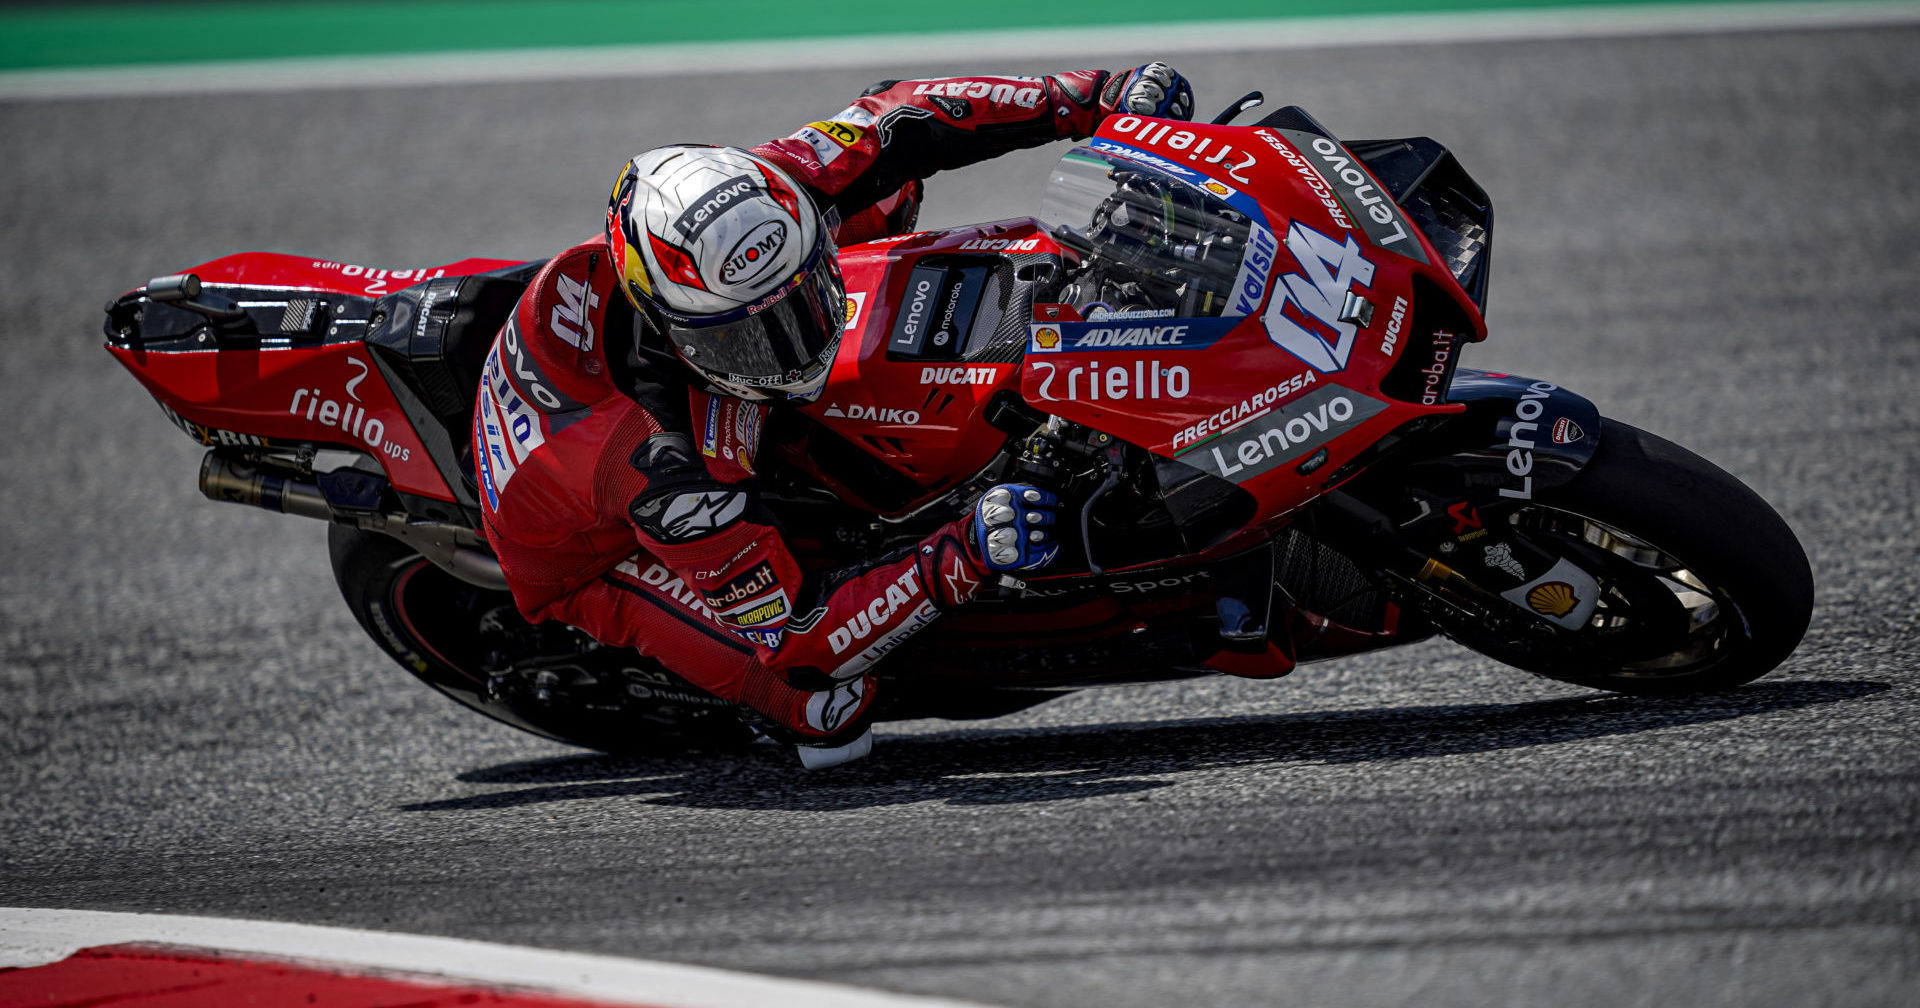 Motogp Ducati Celebrates Its 50 Race Victories Roadracing World Magazine Motorcycle Riding Racing Tech News